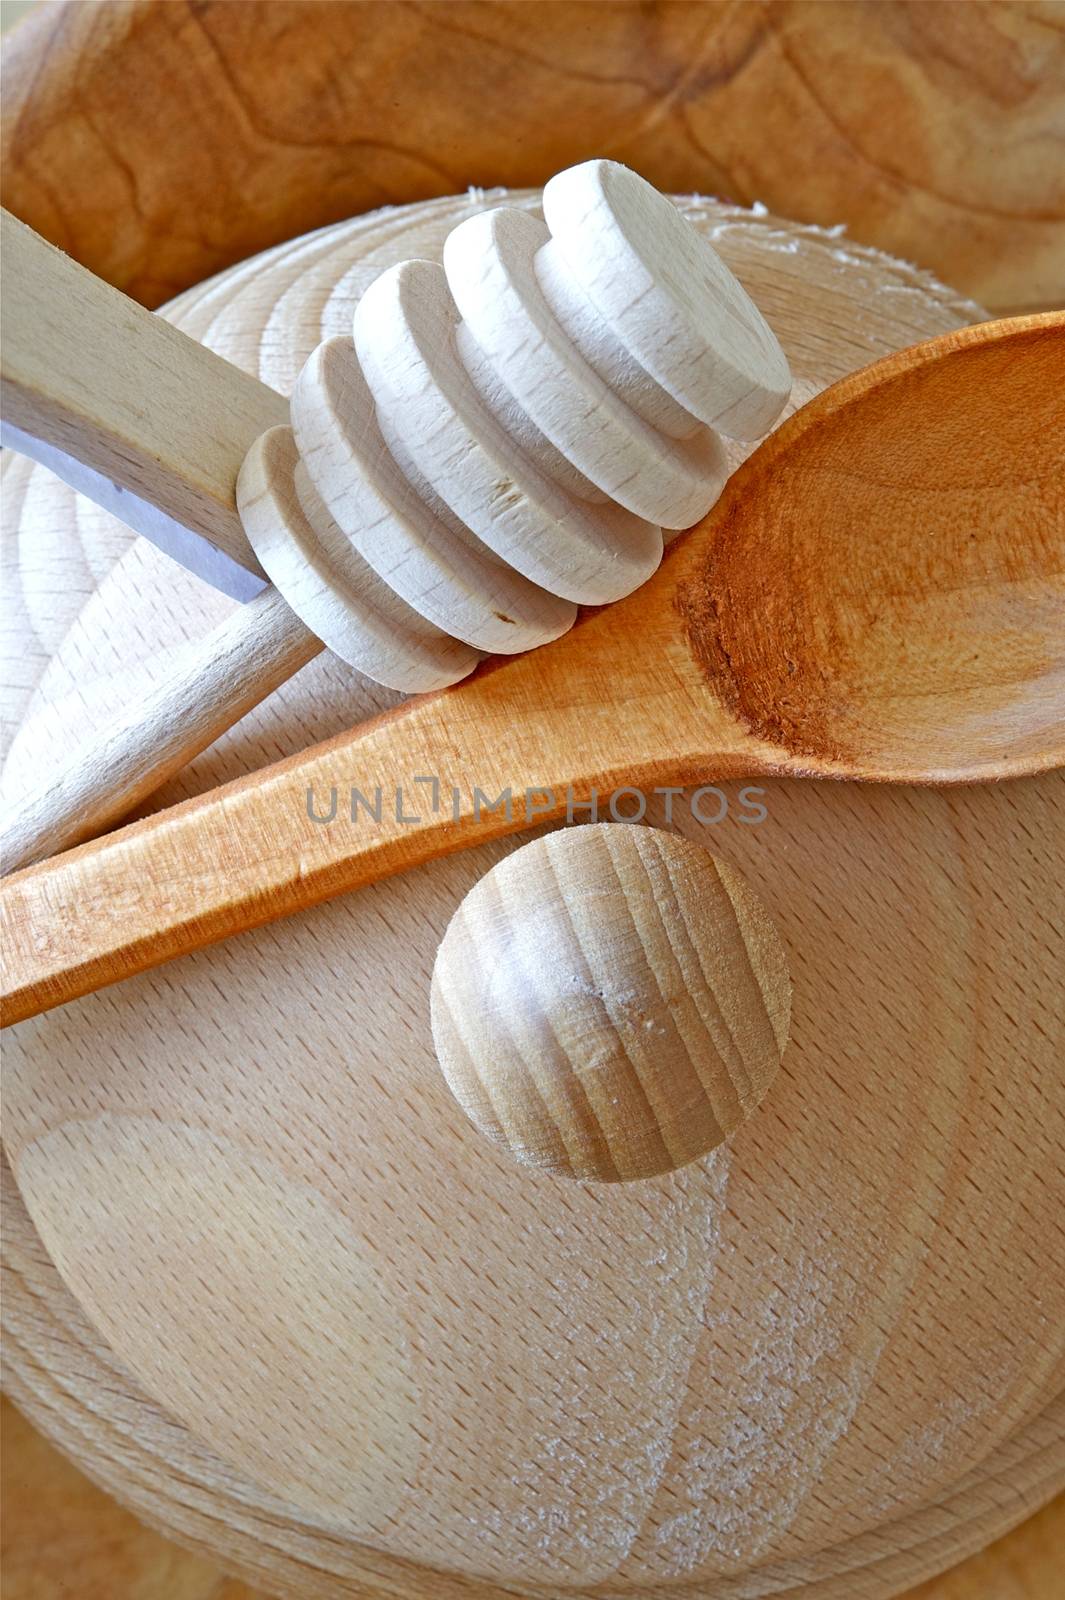 Raw Wood Kitchen Tools Closeup Photography